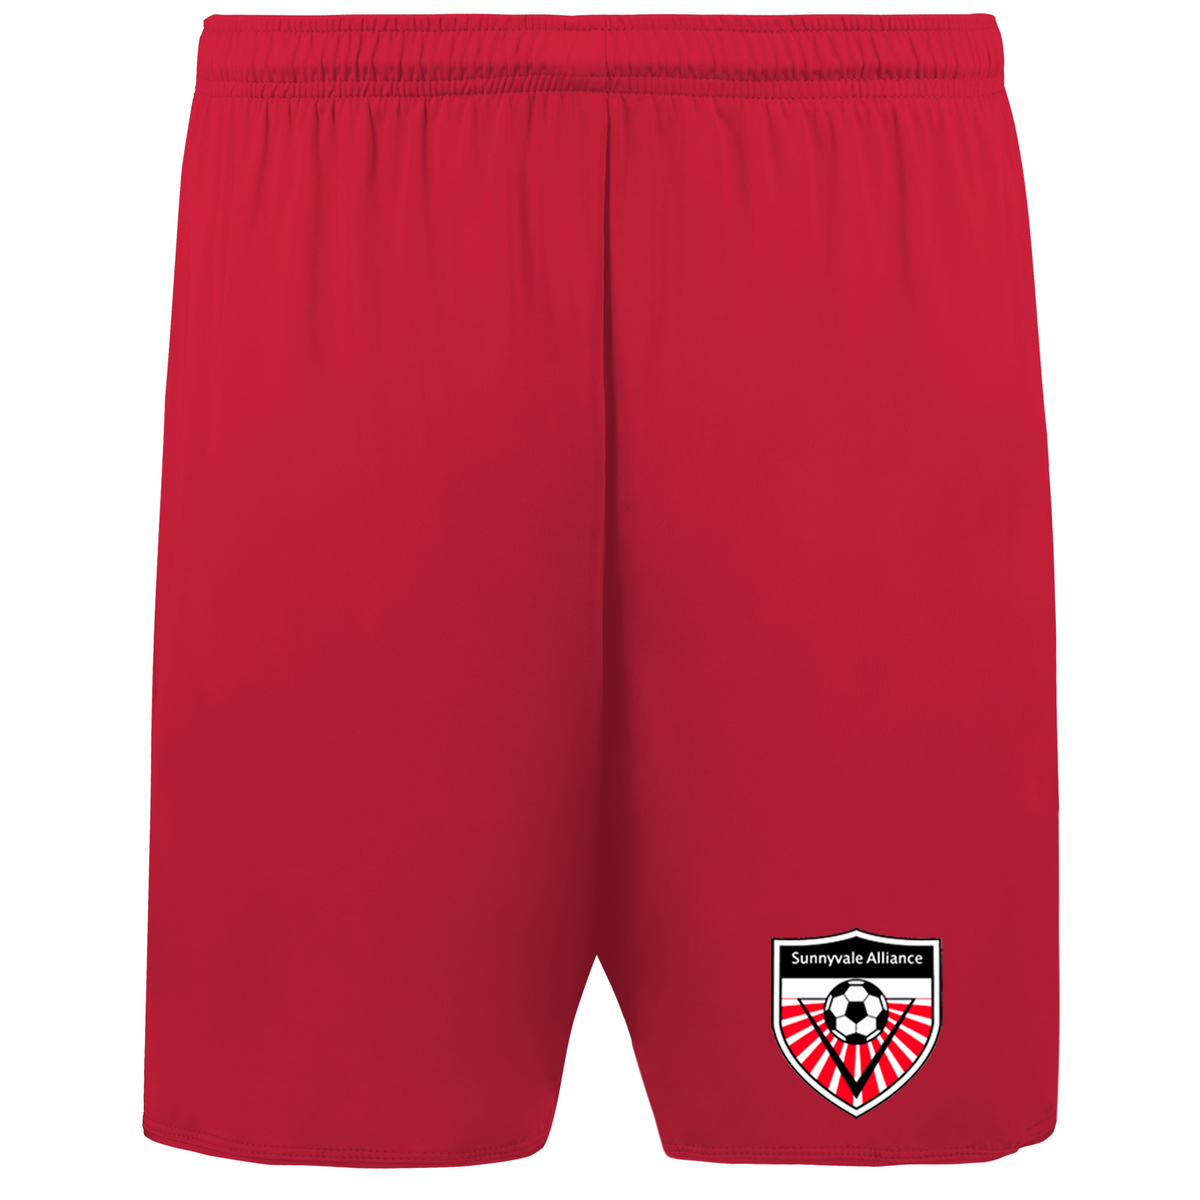 Sunnyvale Alliance Play90 Coolcore Soccer Shorts